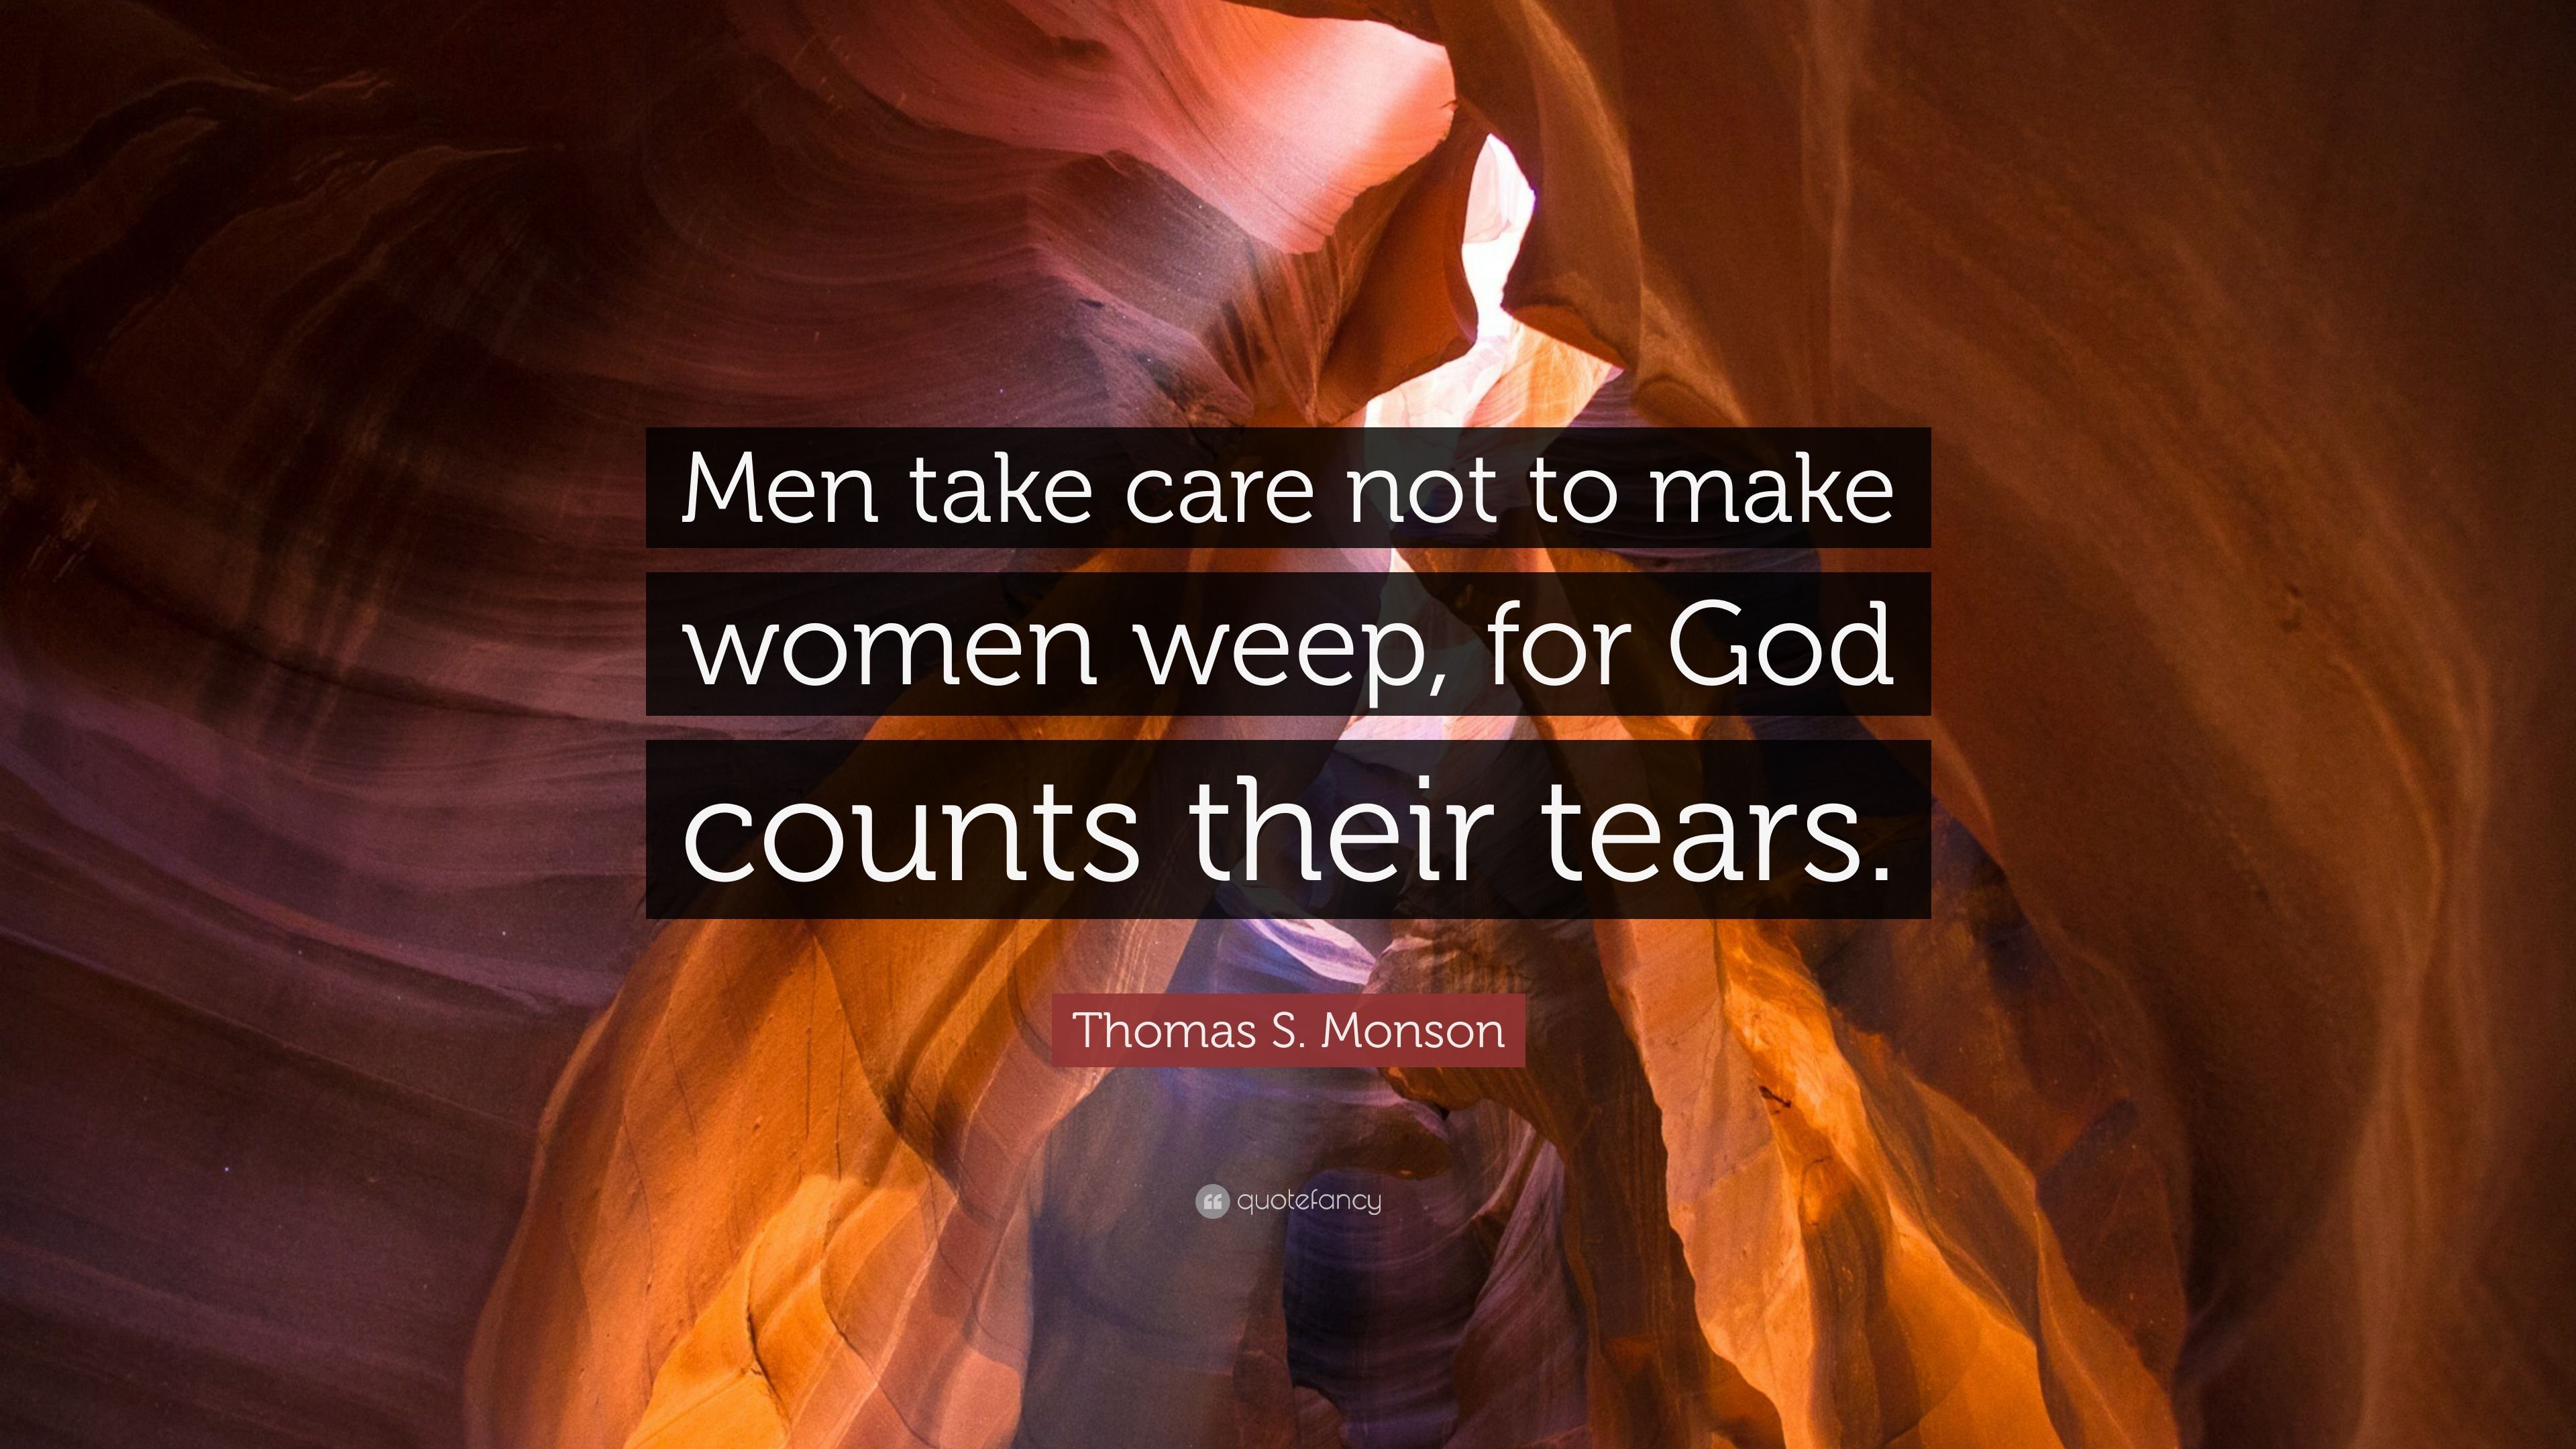 Thomas S. Monson Quote: “Men take care not to make women weep